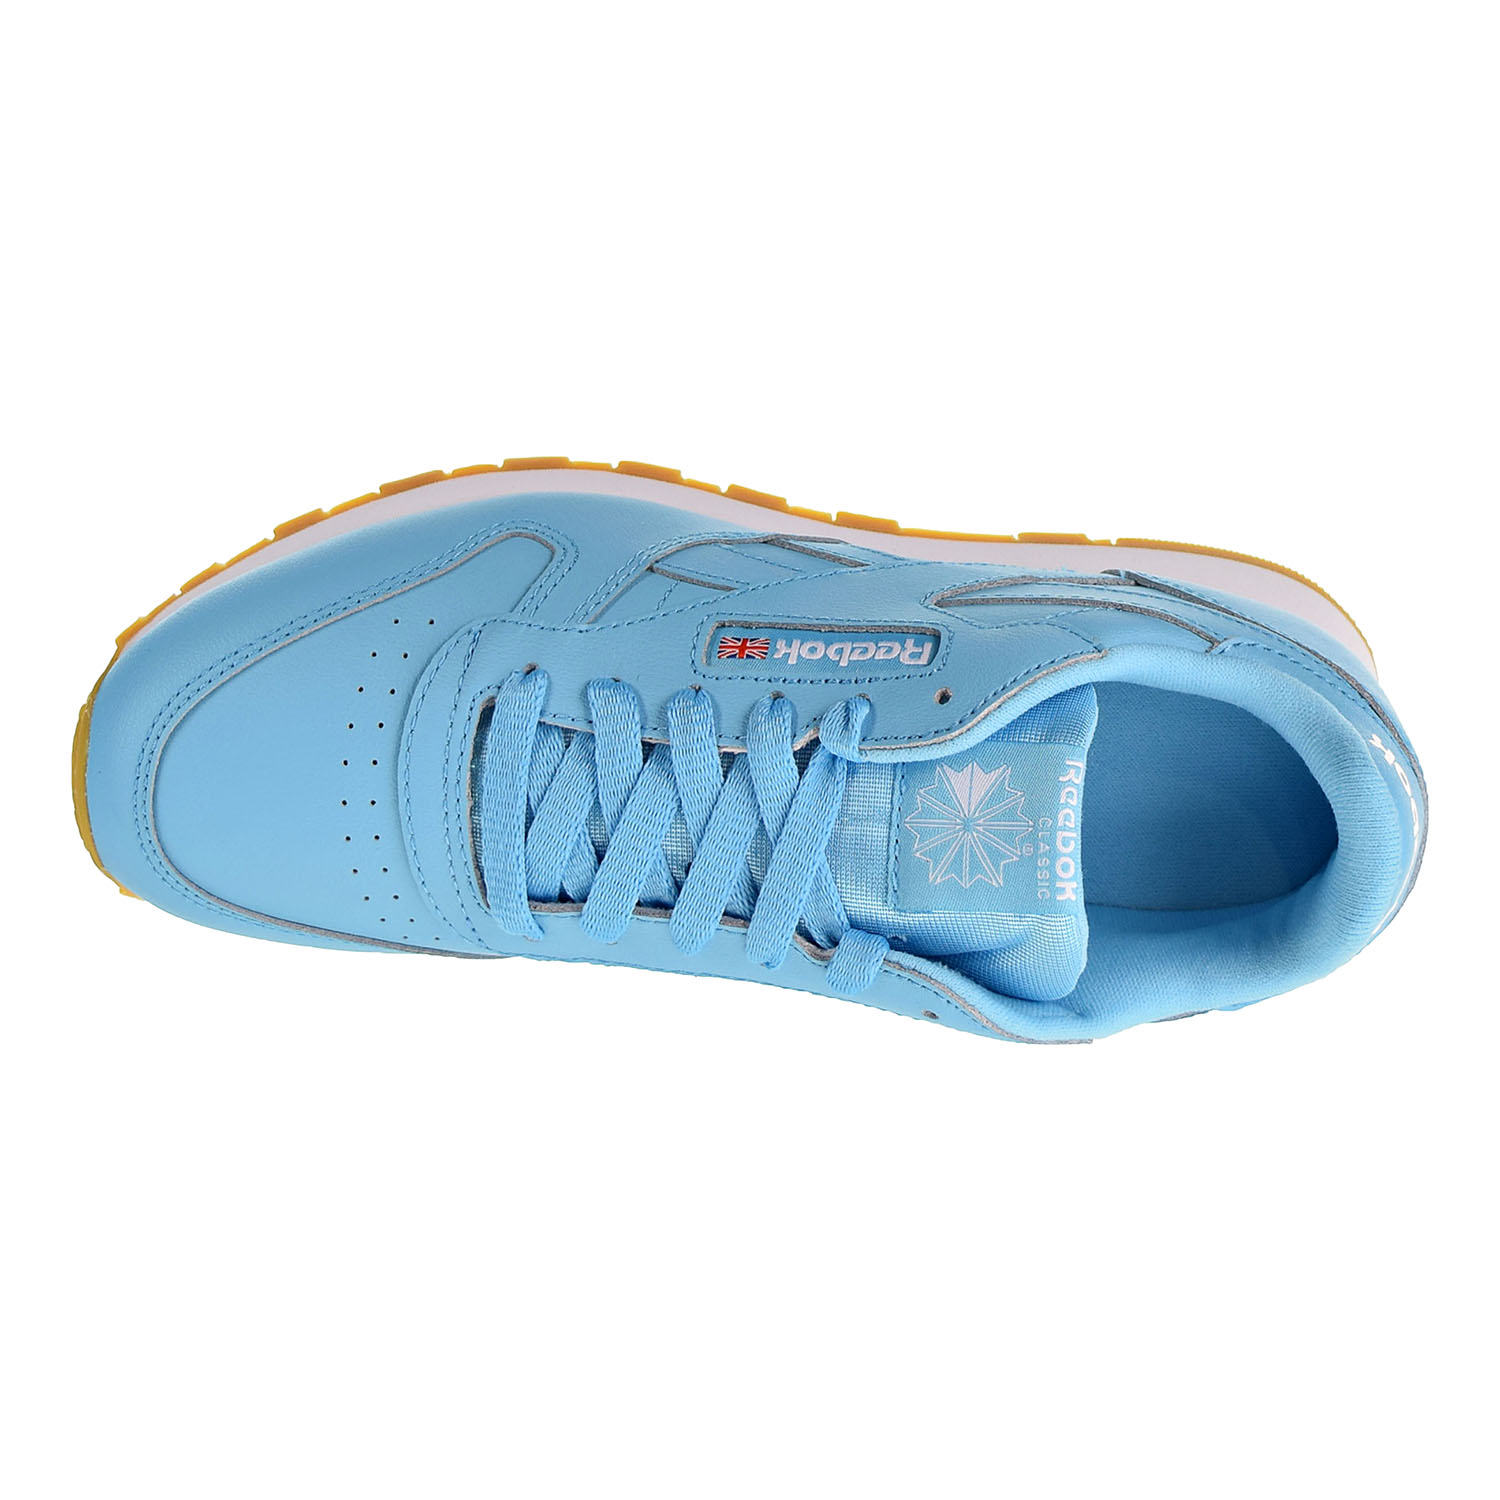 Reebok Classic Leather Gum Boys Shoes Crisp Blue/White/Gum cn4095 - image 5 of 6